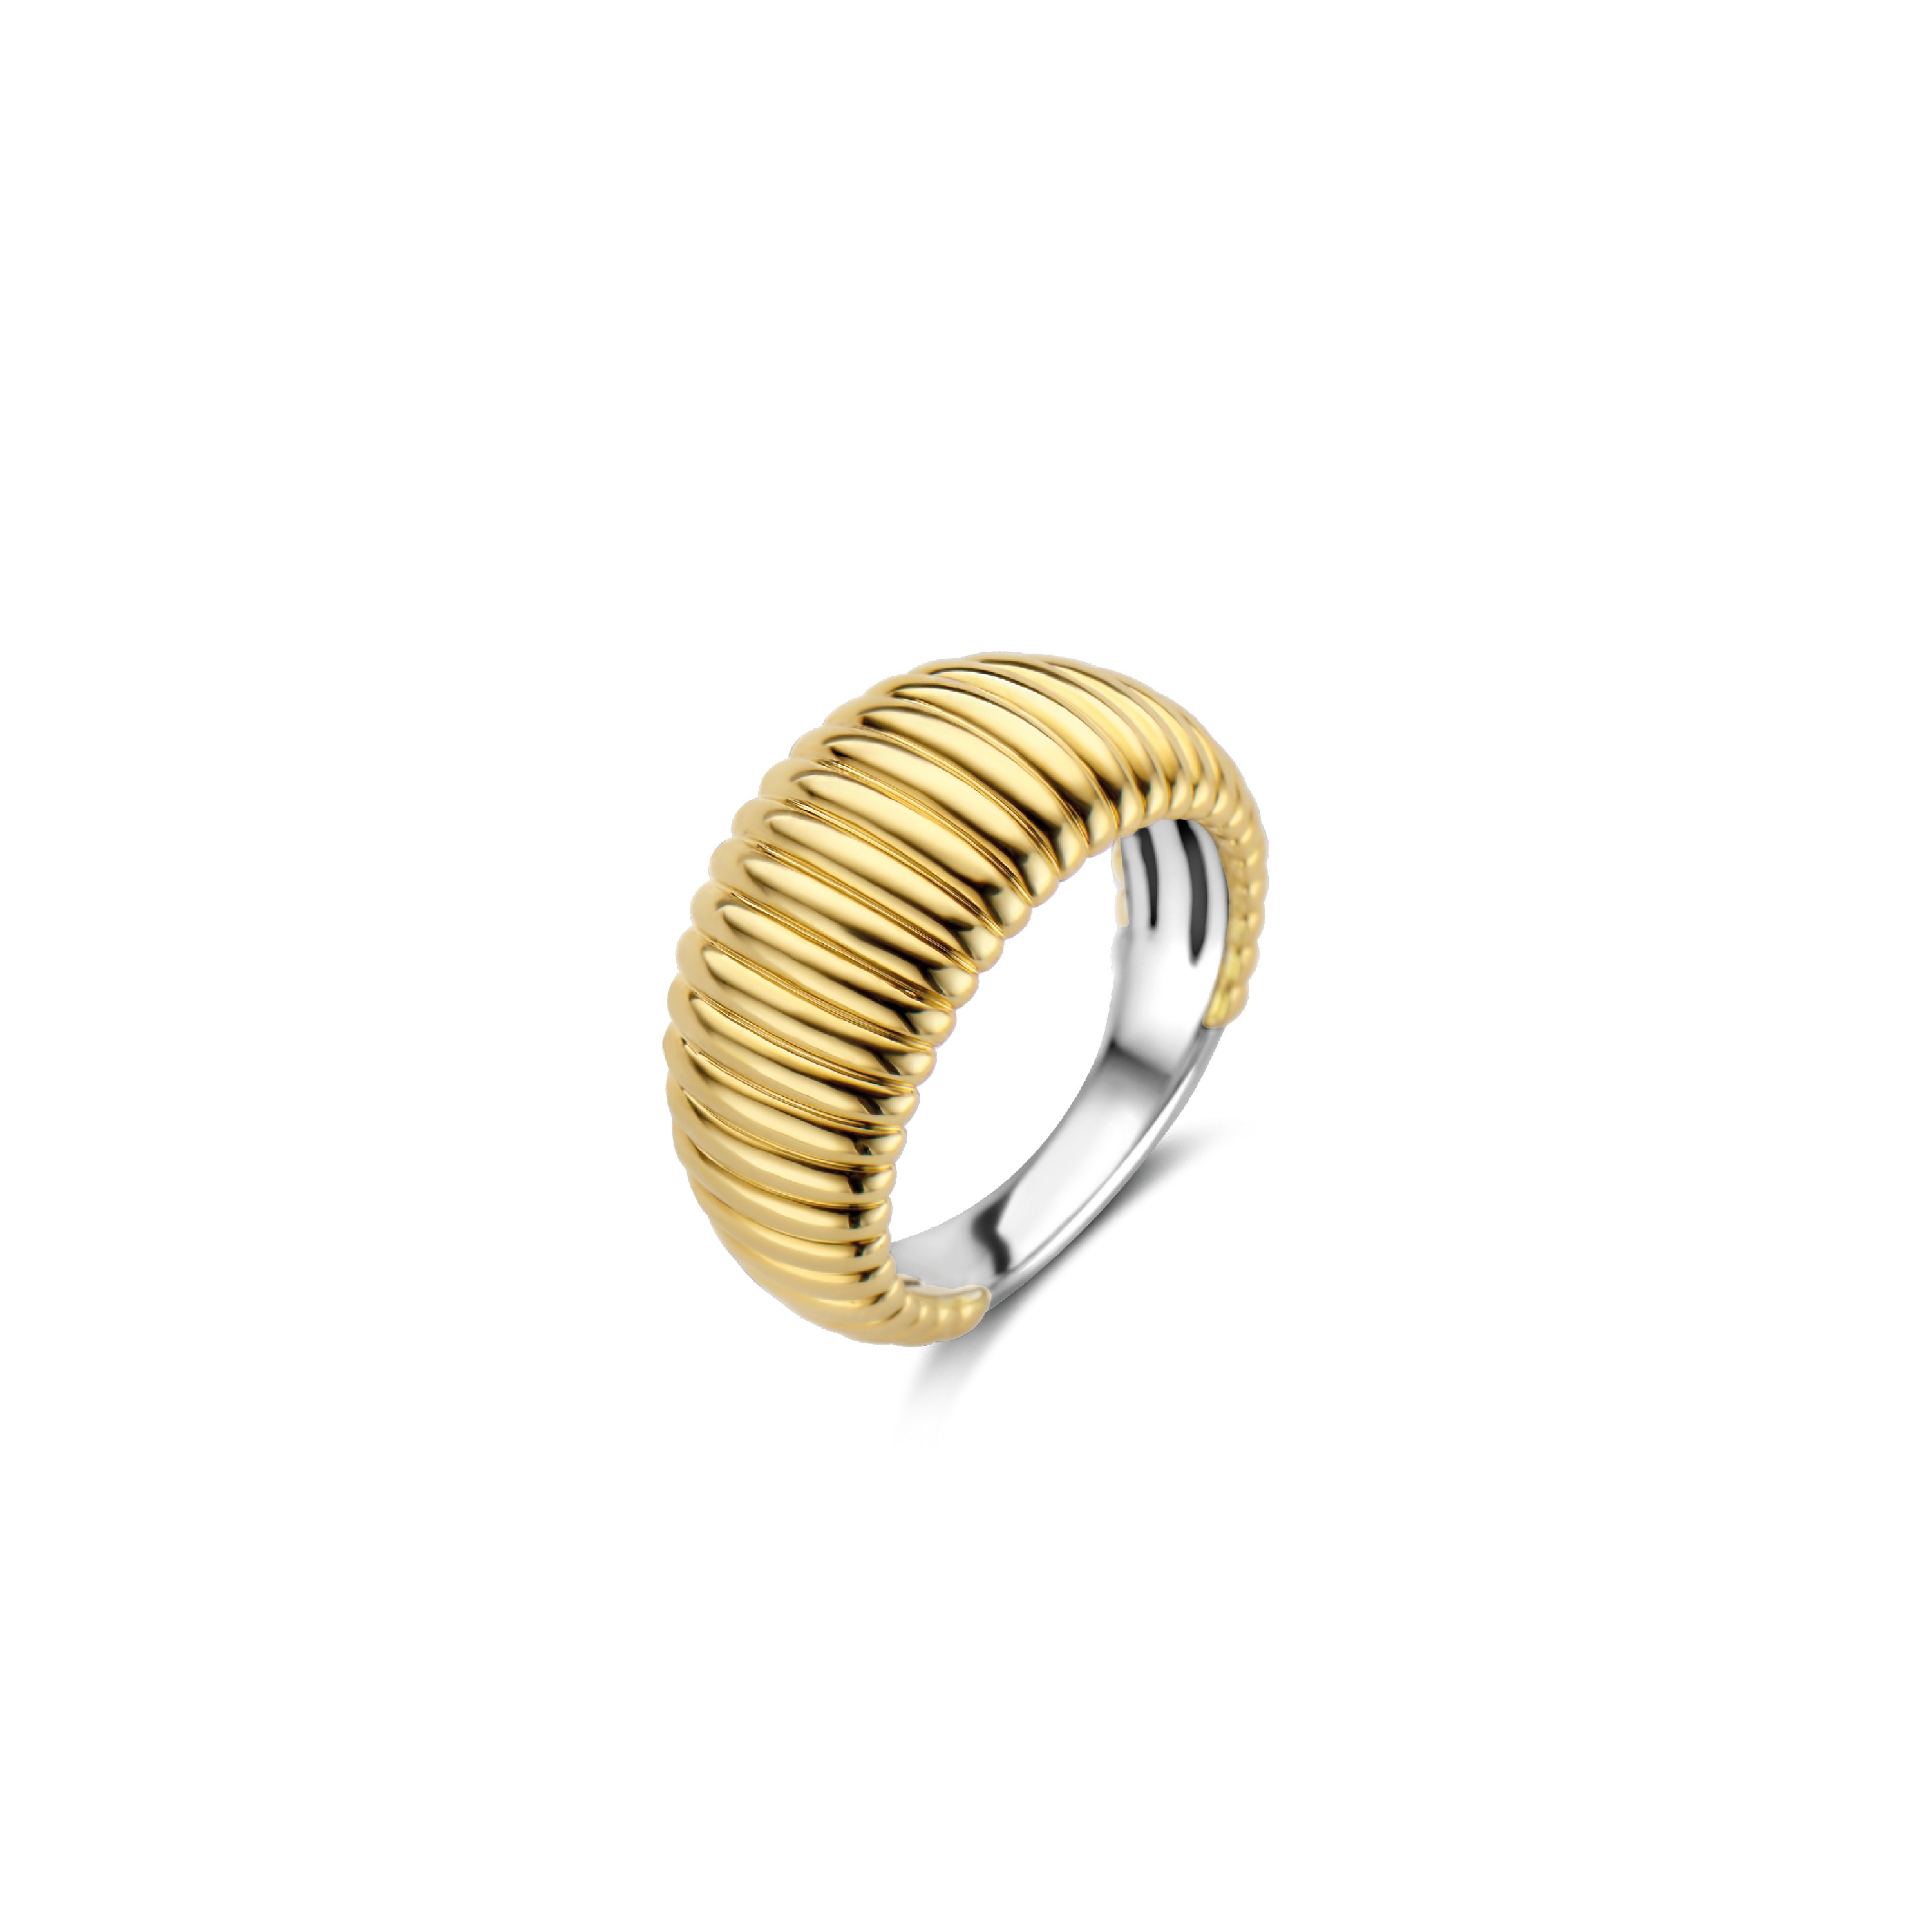 TI SENTO - Milano Ring 12217SY Gala Jewelers Inc. White Oak, PA